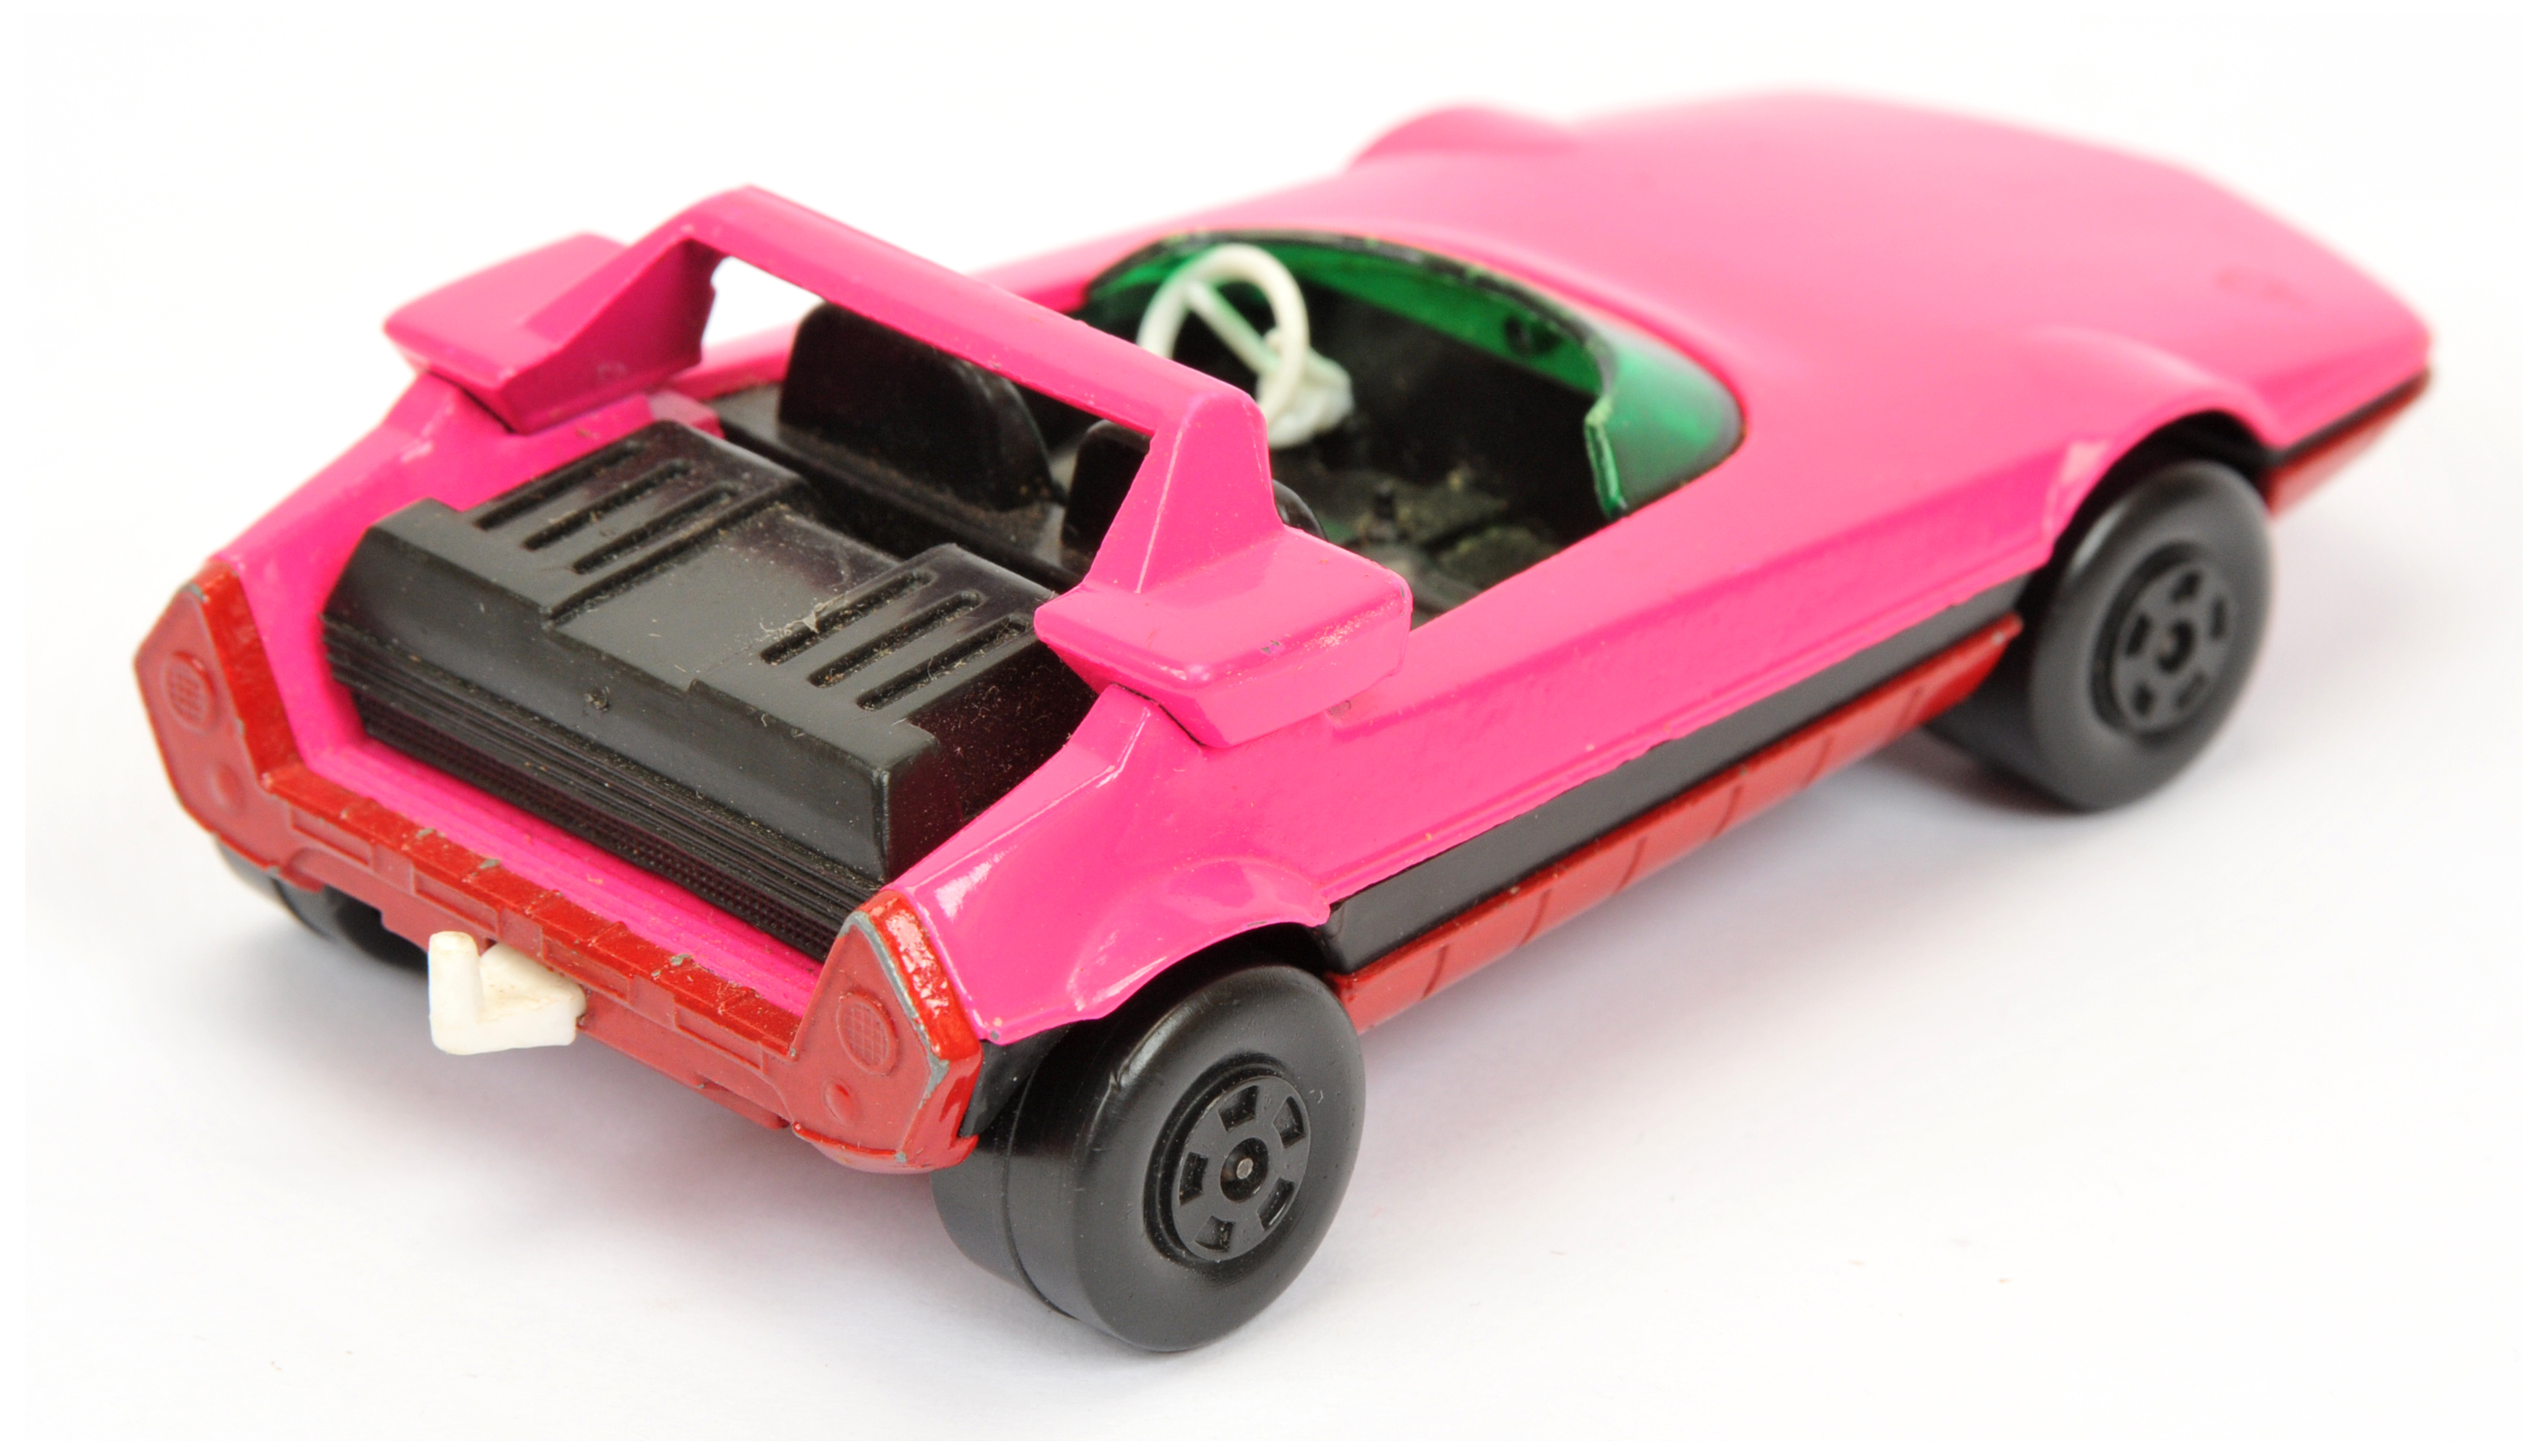 Matchbox Speed Kings K31 Bertone Runabout factory trial model - Hot pink body, dark green windscr... - Image 2 of 3